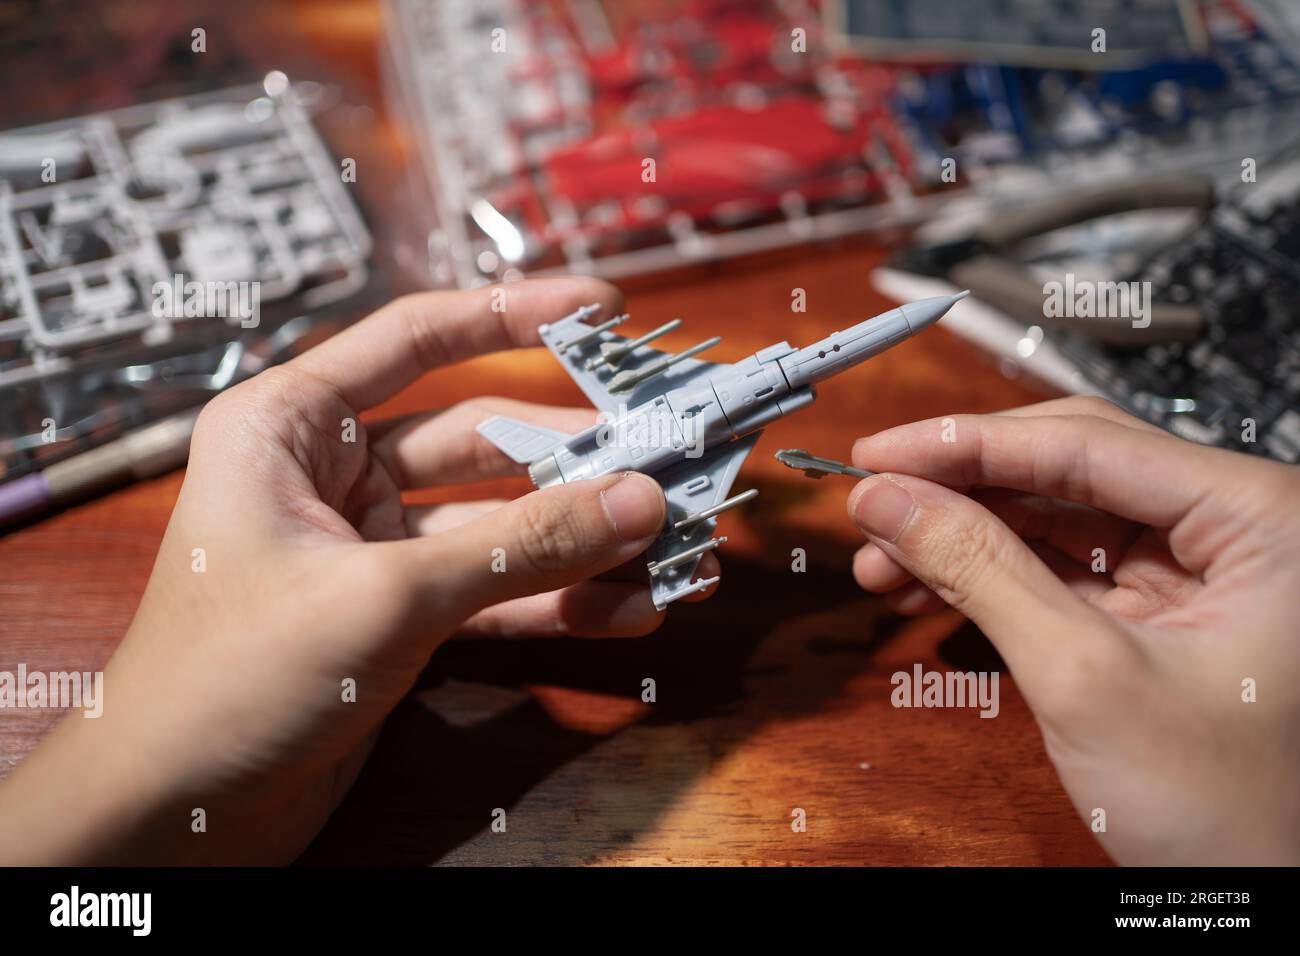 Assembling jet plane plastic model kit Stock Photo